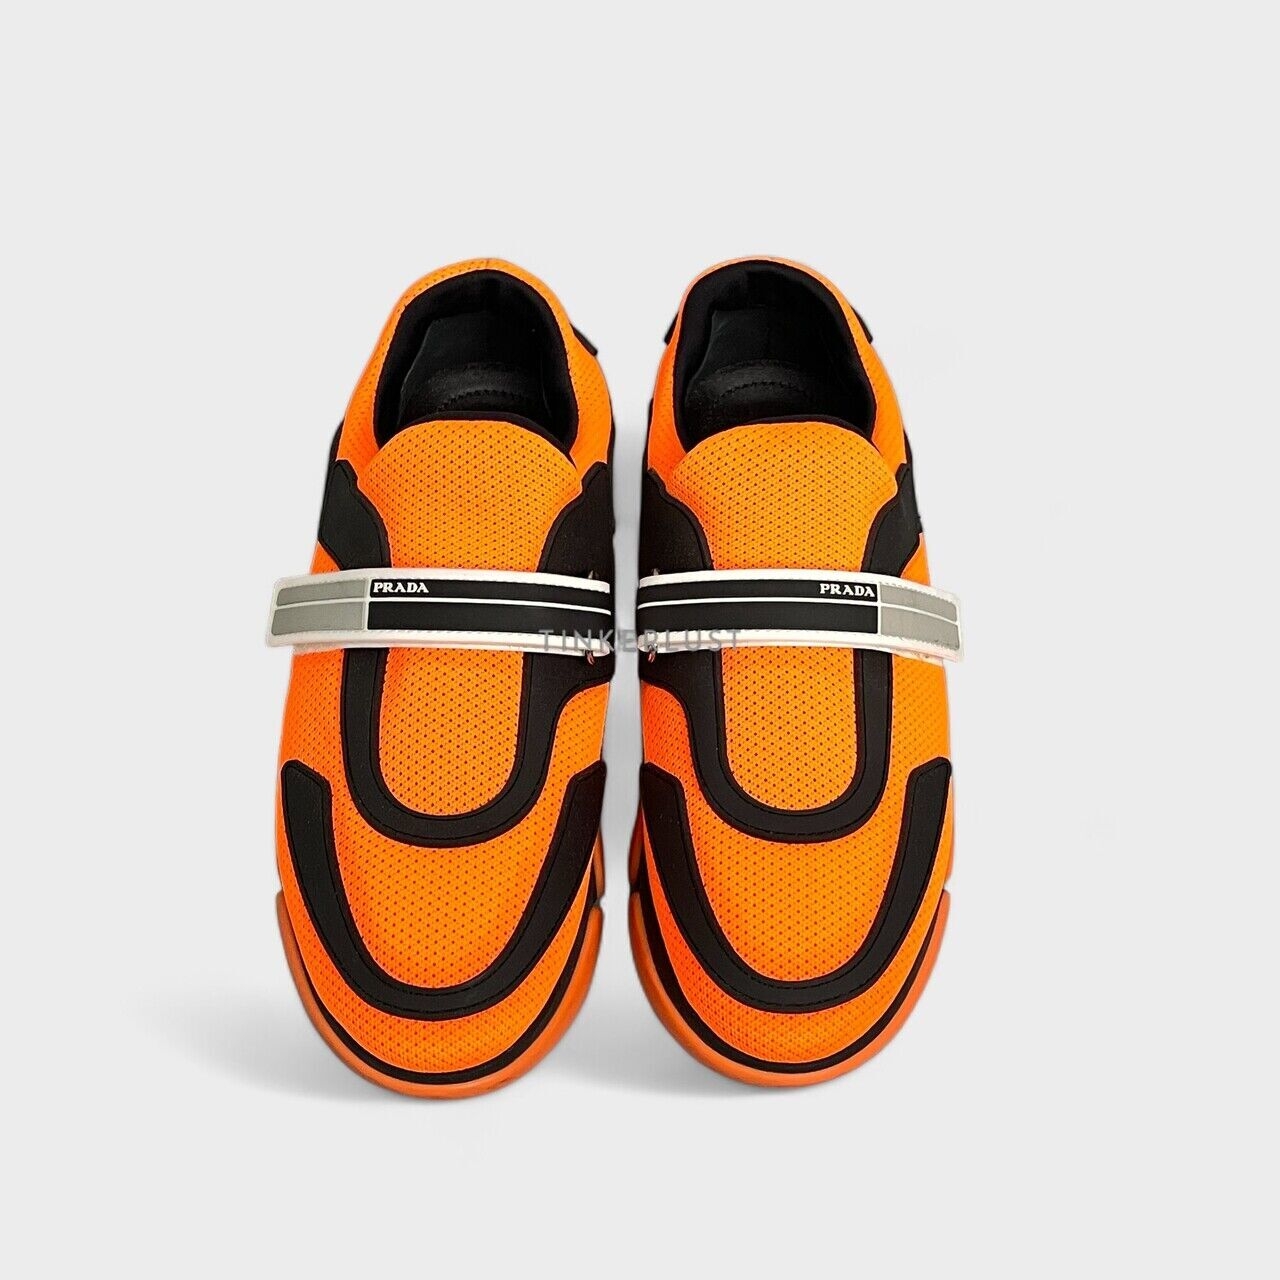 Prada Cloudbust Neon Orange Sneakers